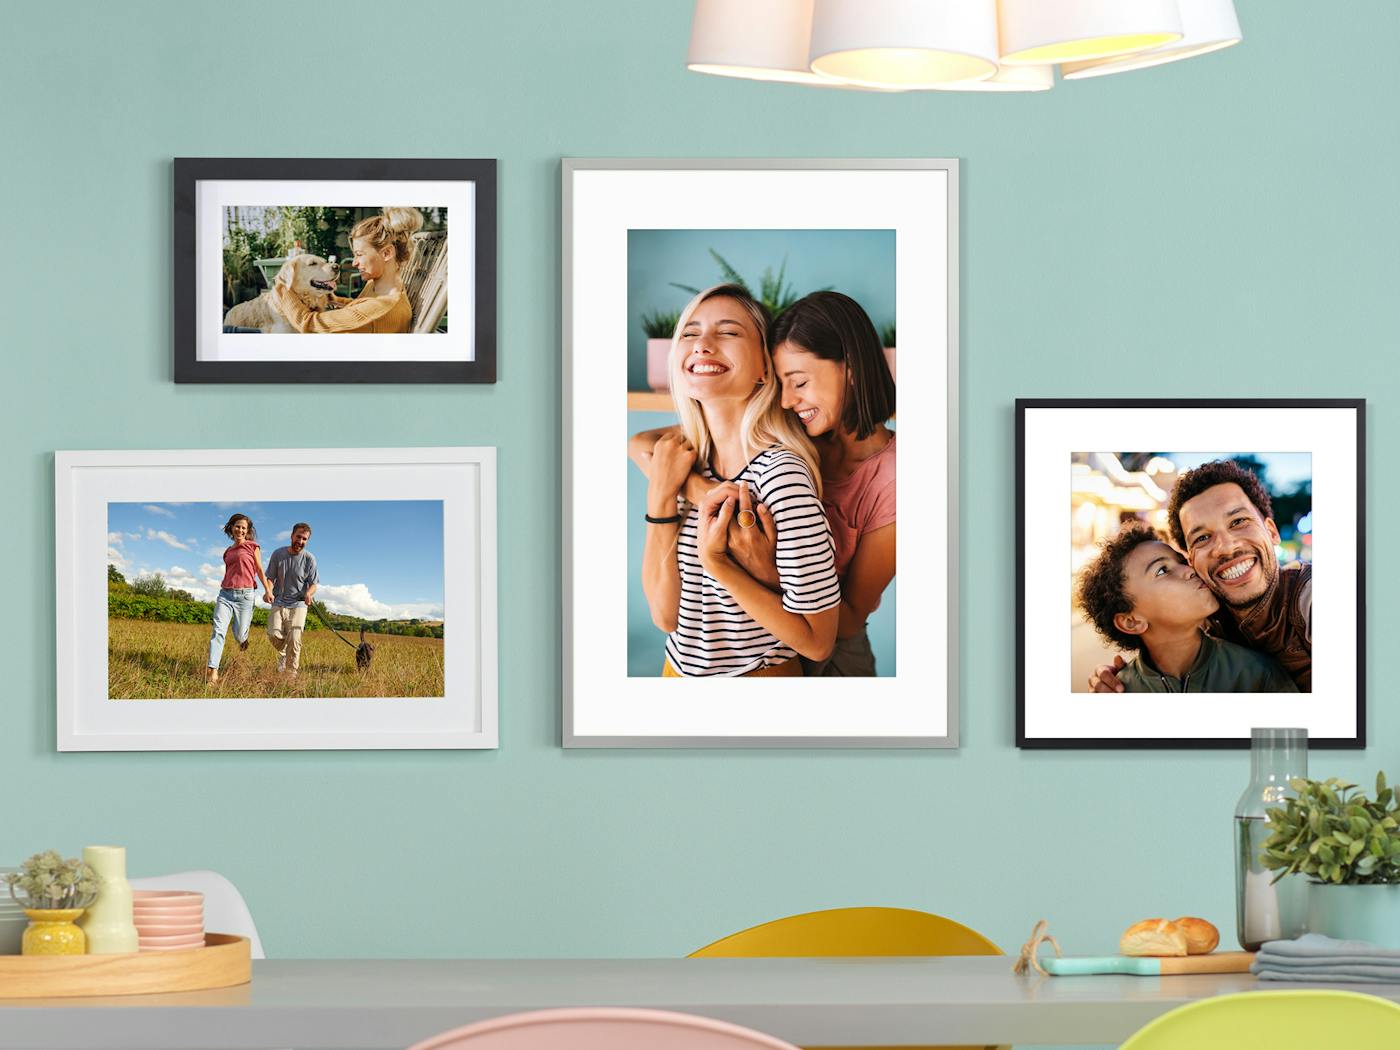 Design Your New Framed Photo Print